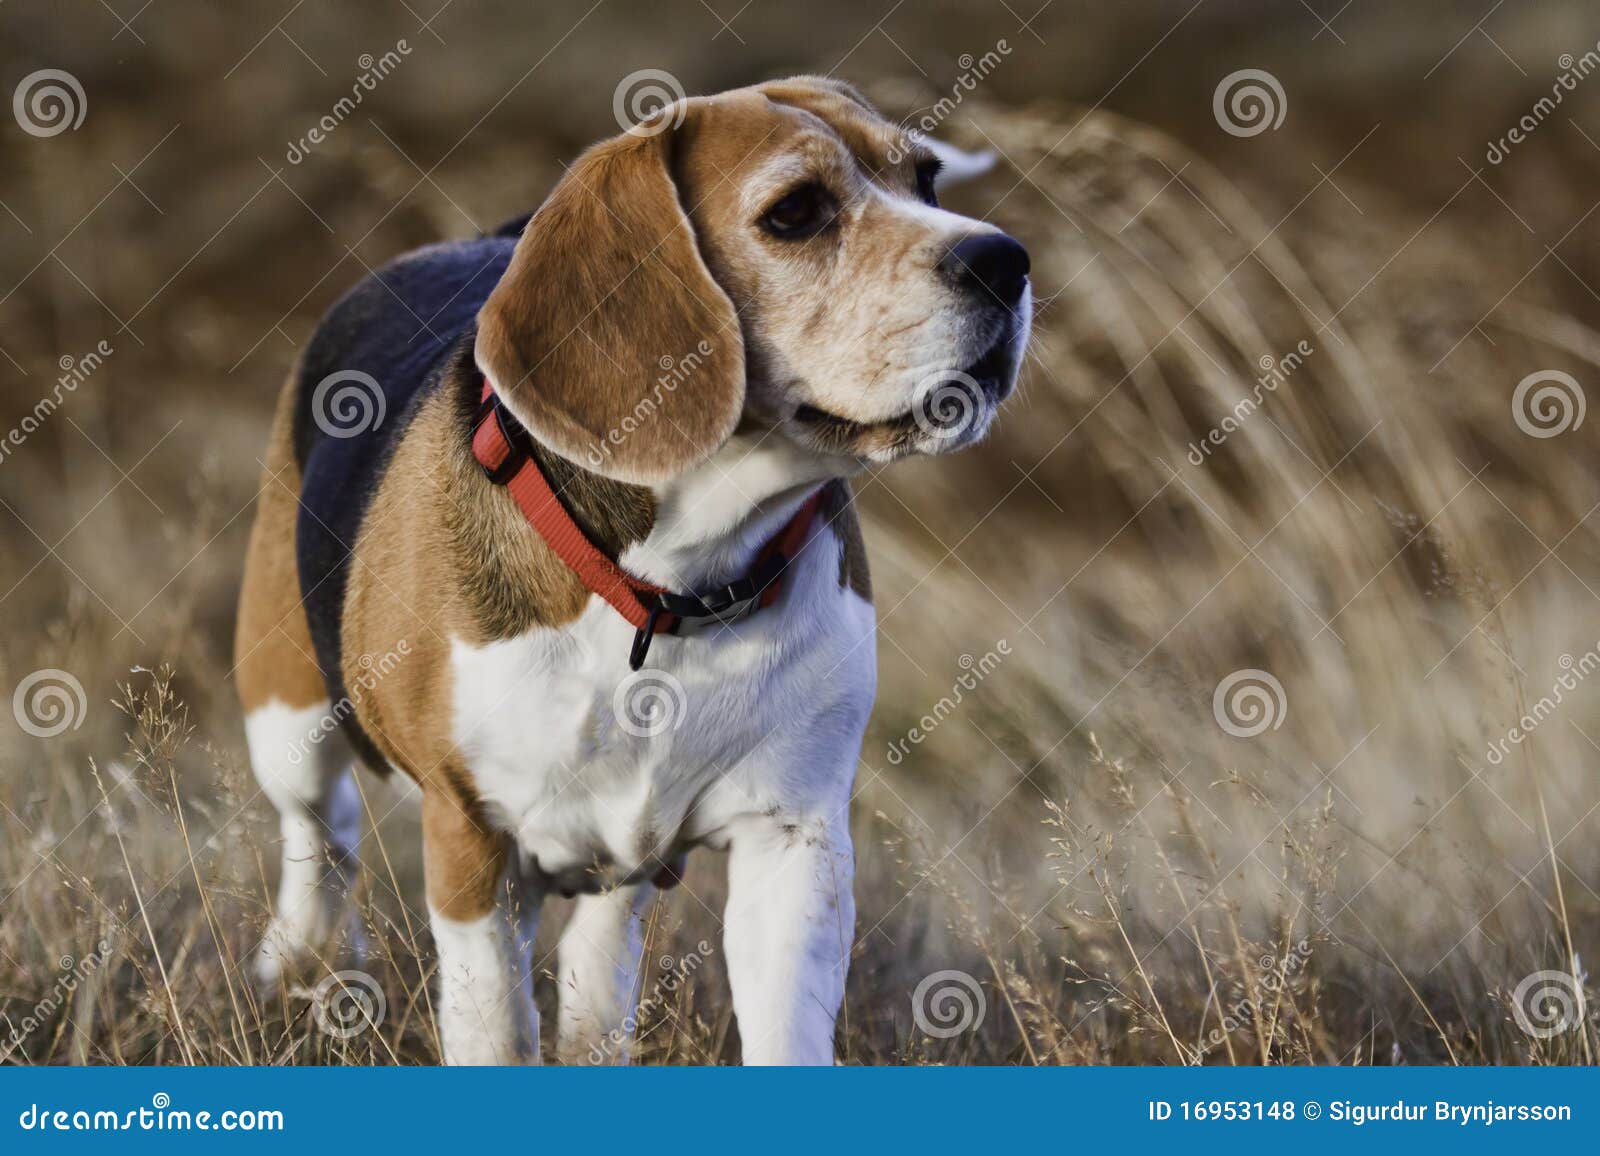 Happy senior Beagle dog enjoying outdoor activities